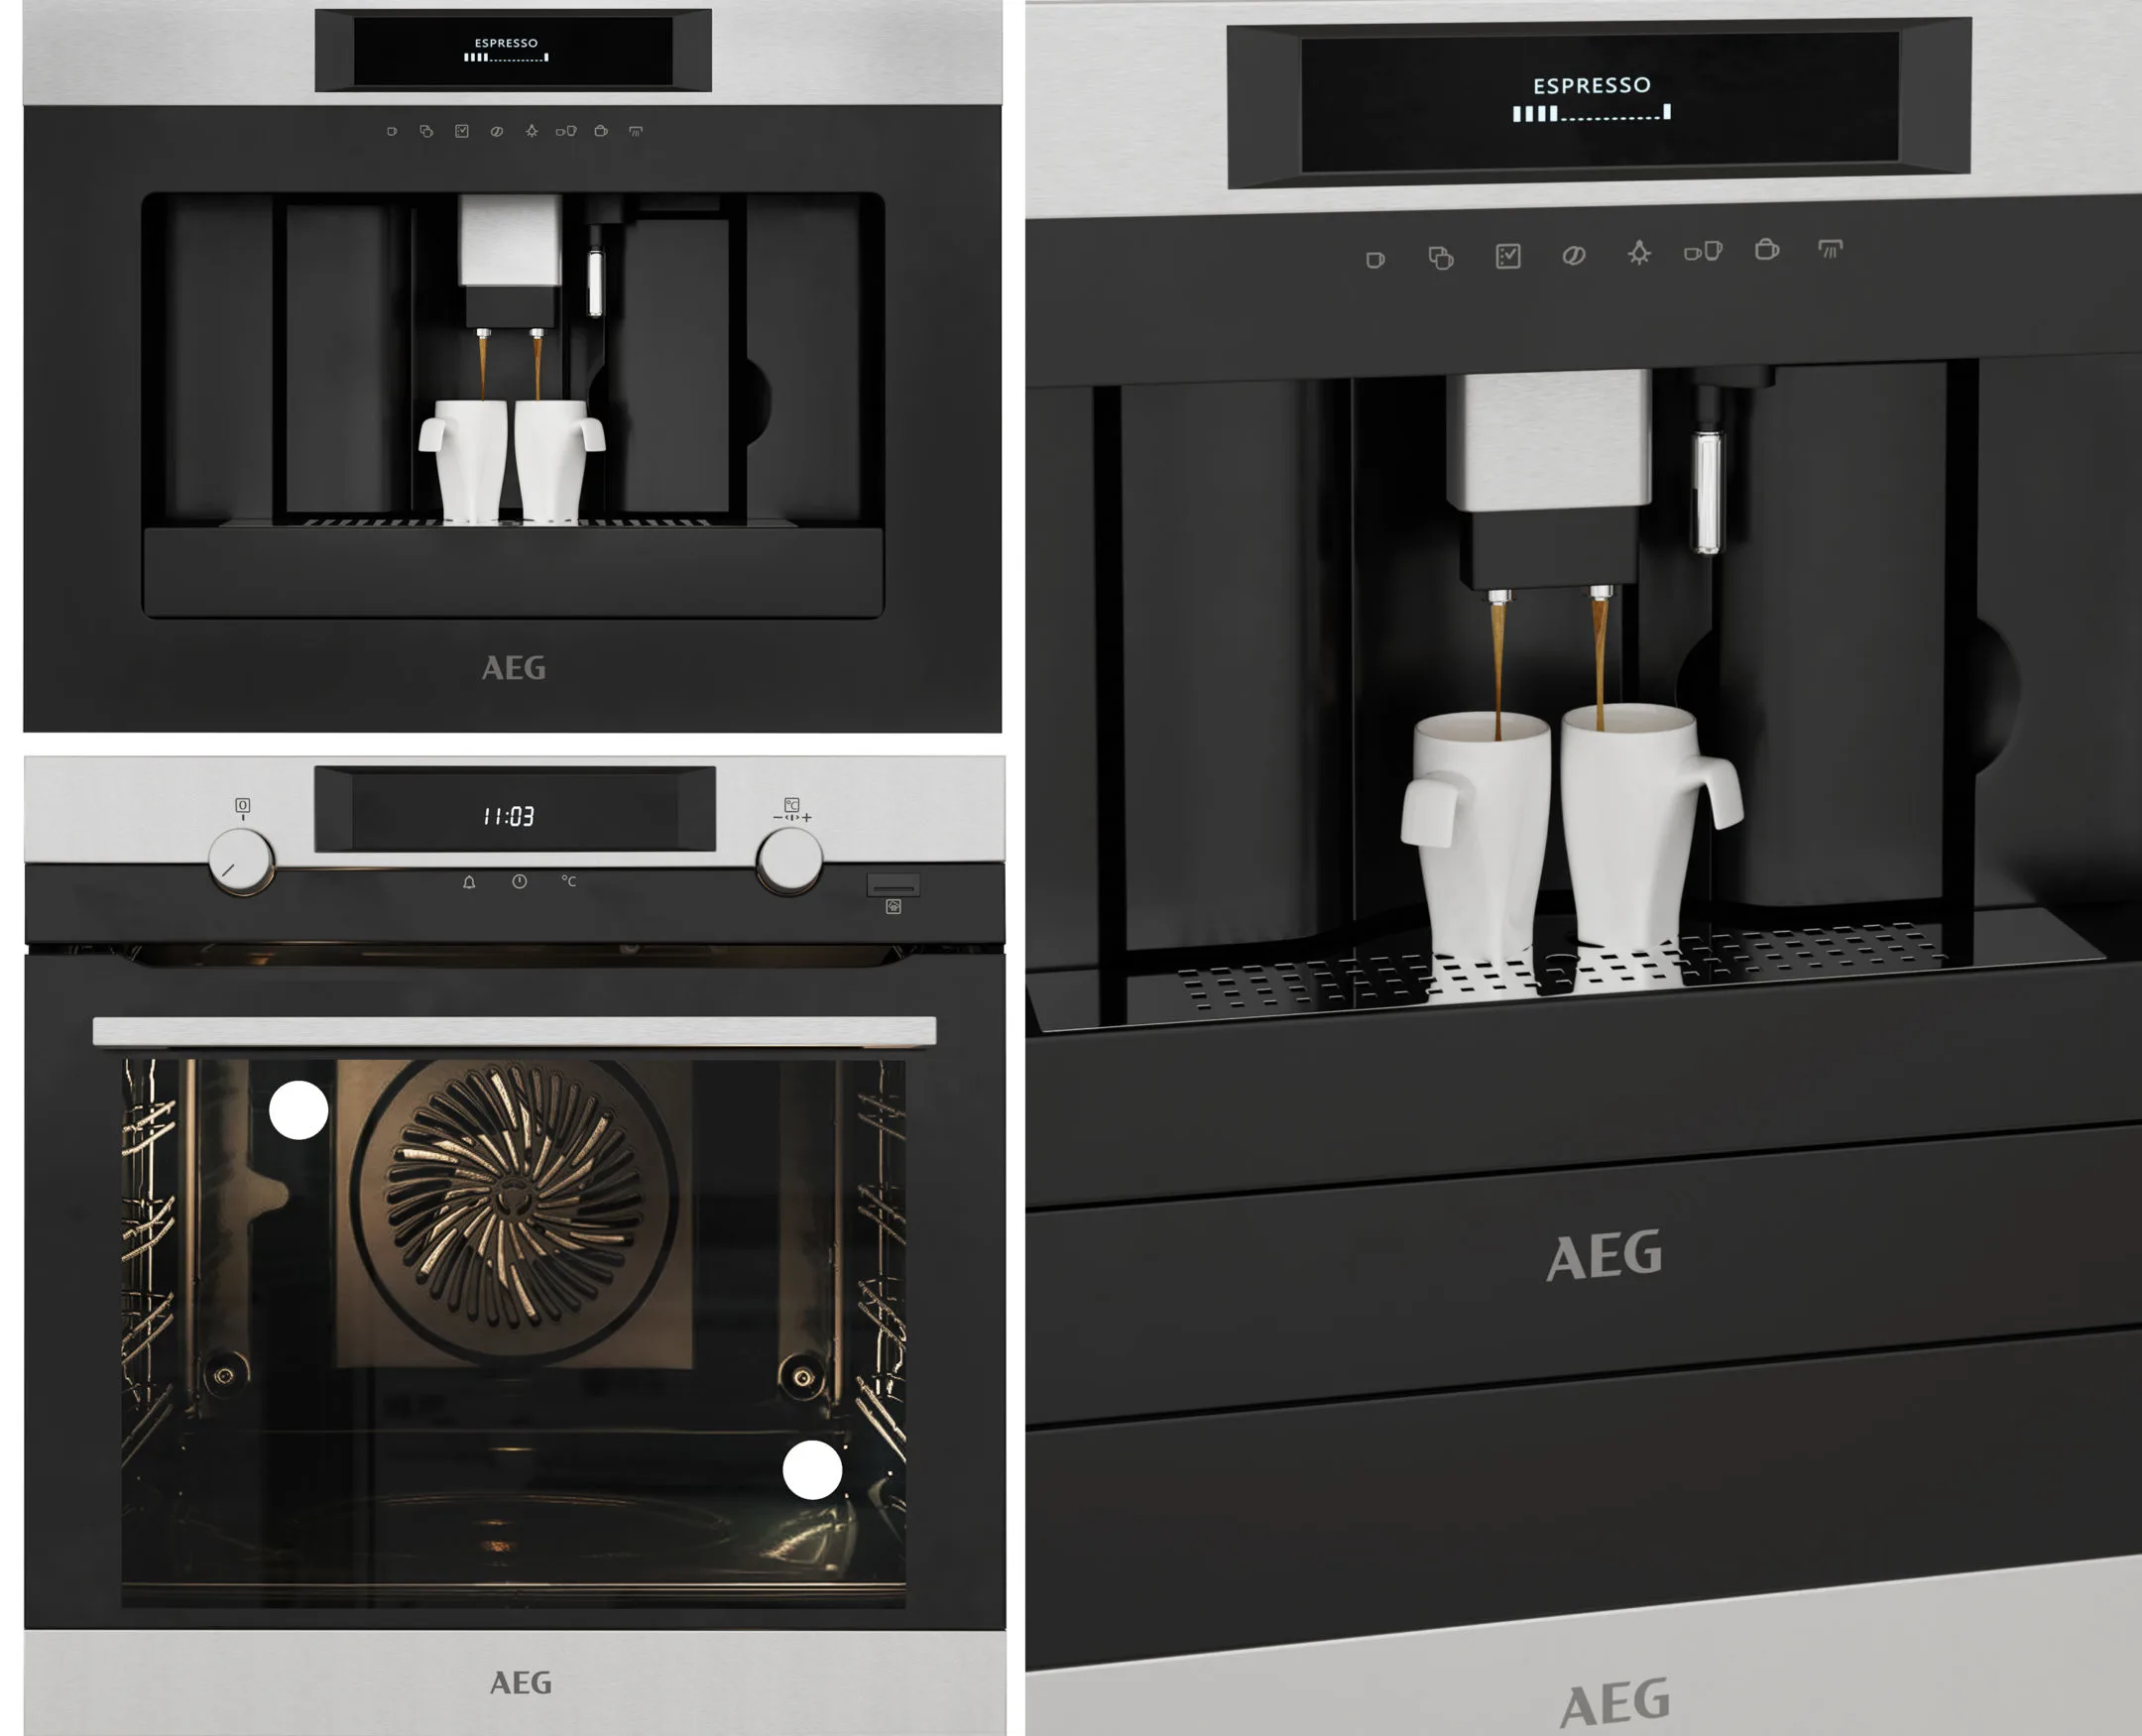 AEG Espresso Coffee Machine and SteamBake Oven